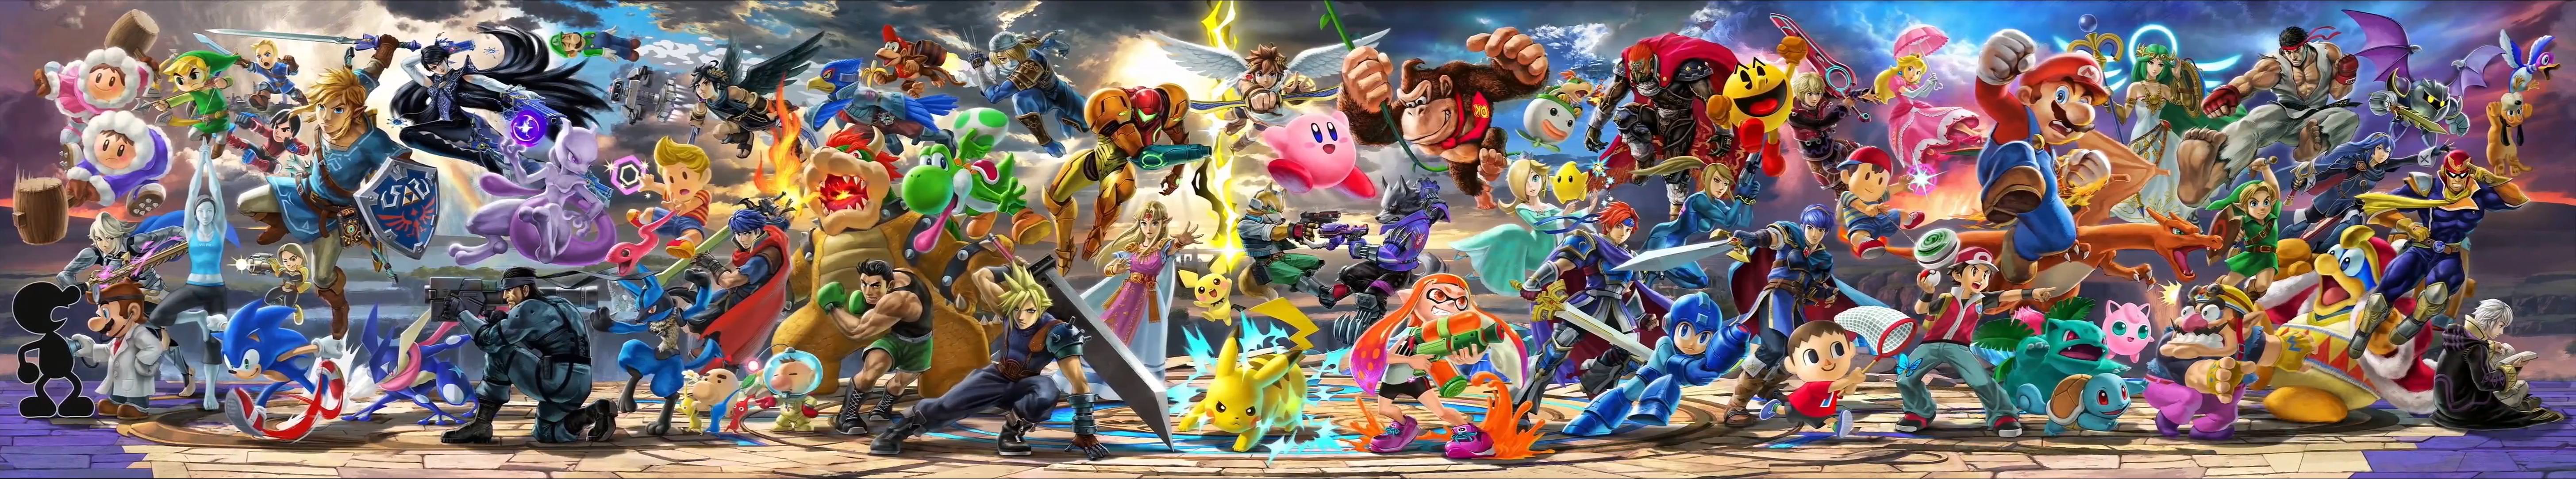 Super Smash Bros Ultimate Wallpaper HD